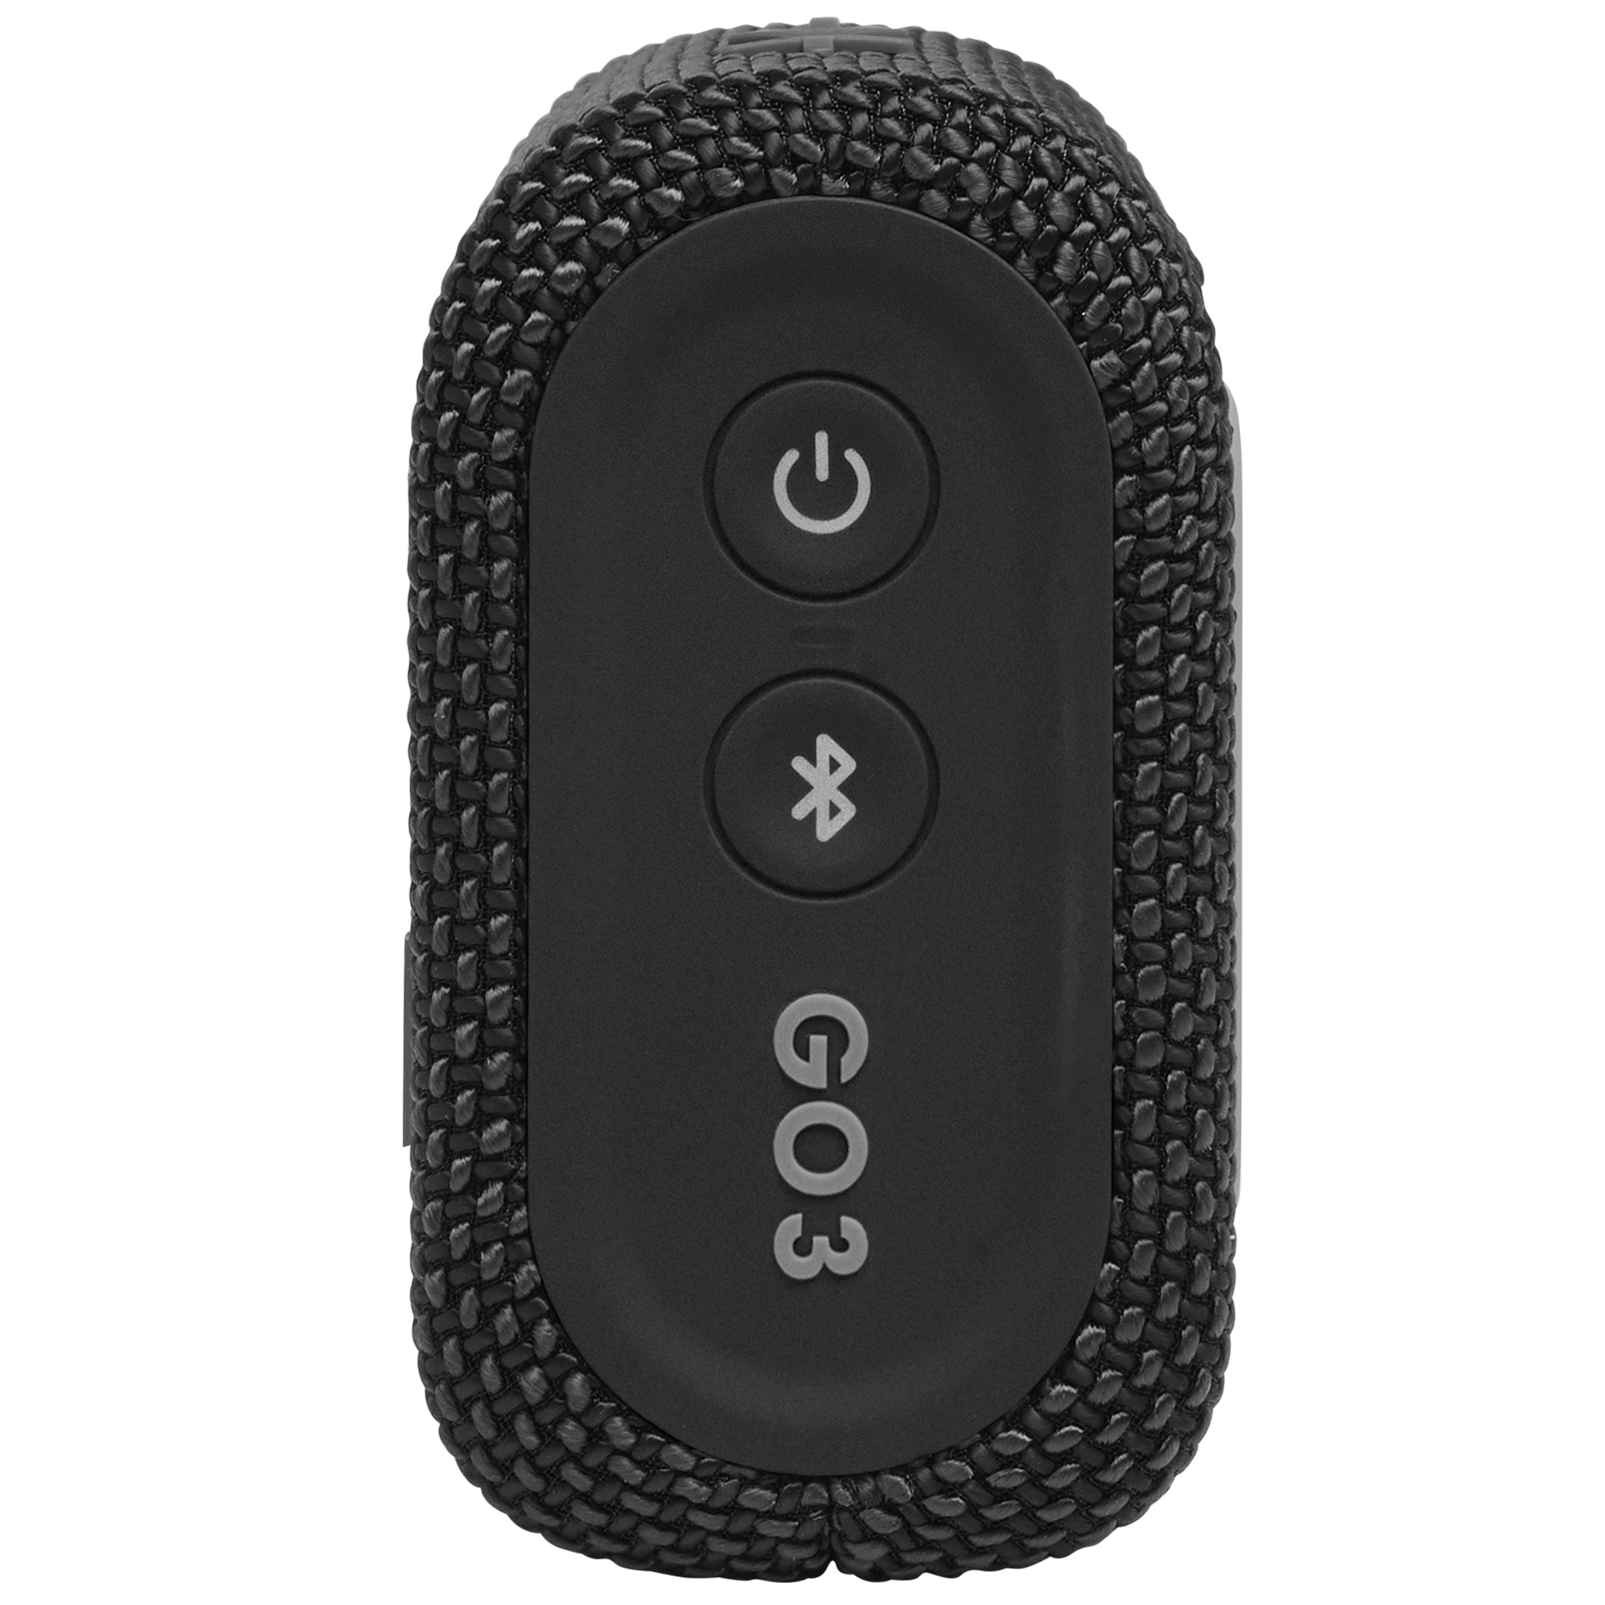 JBL Go 3 - Black - Portable Waterproof Speaker - Right